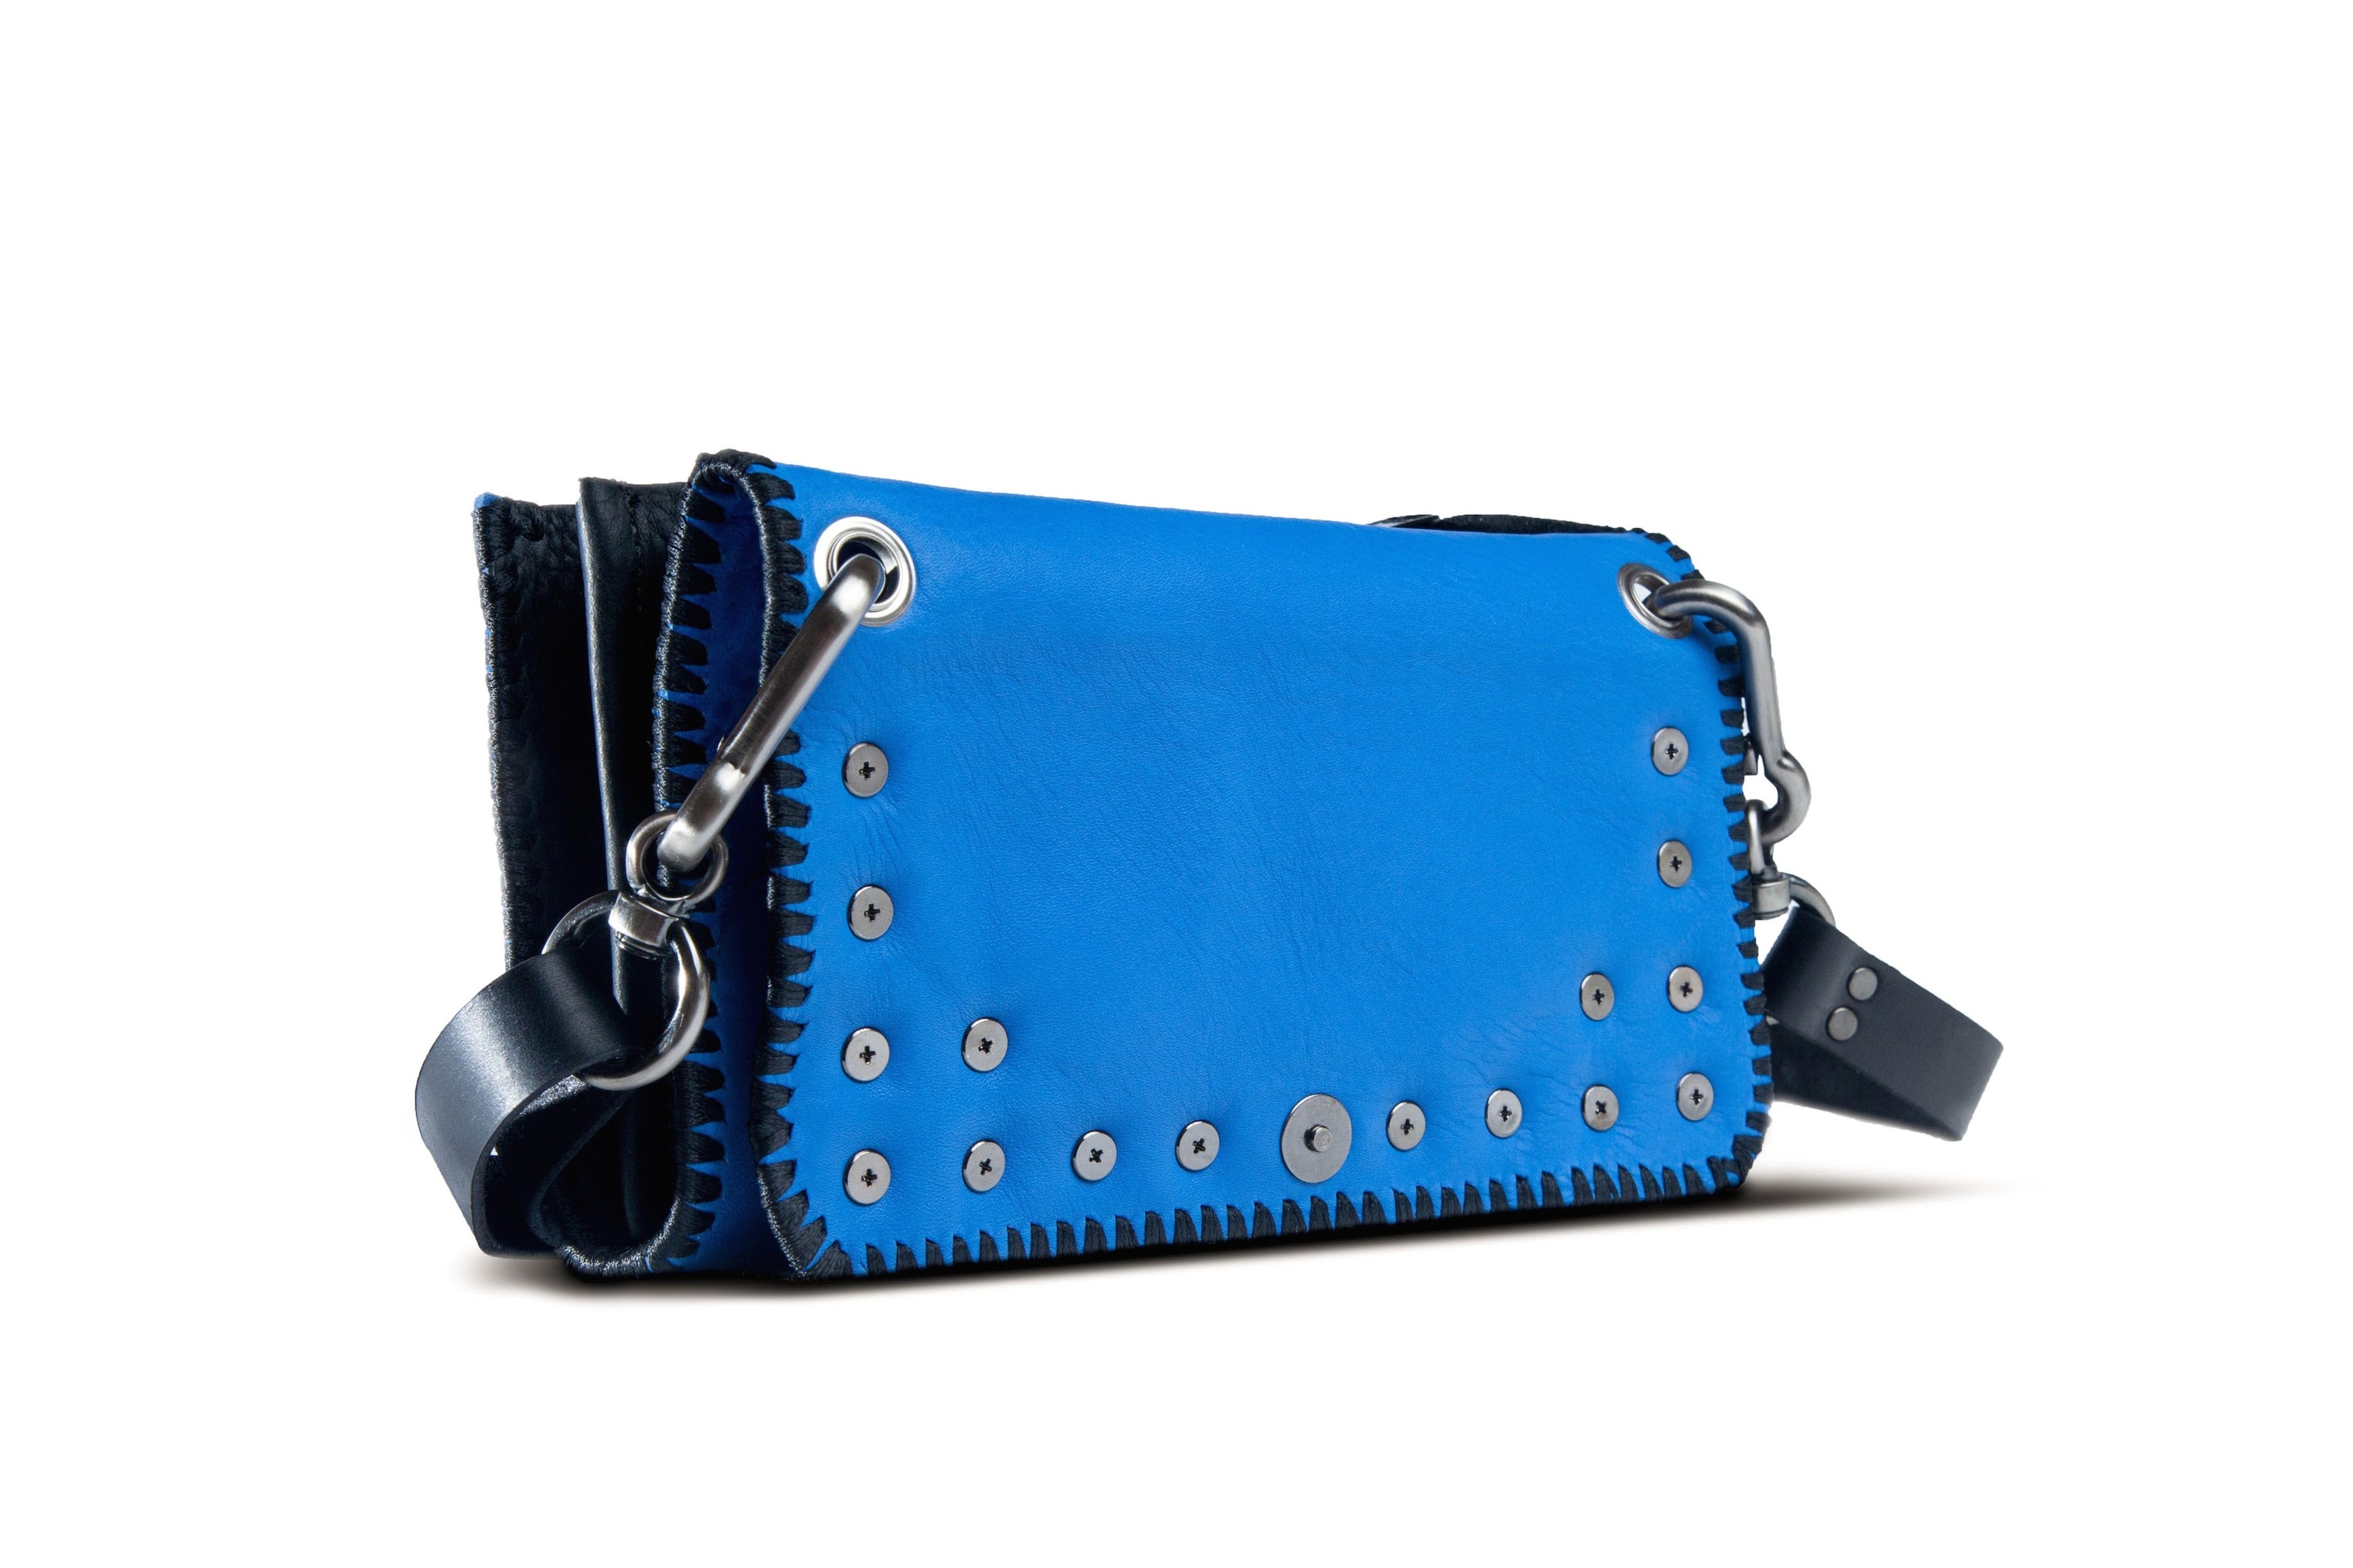 Royal Blue Studded Purse for women Crossbody Bag Medium Shoulder